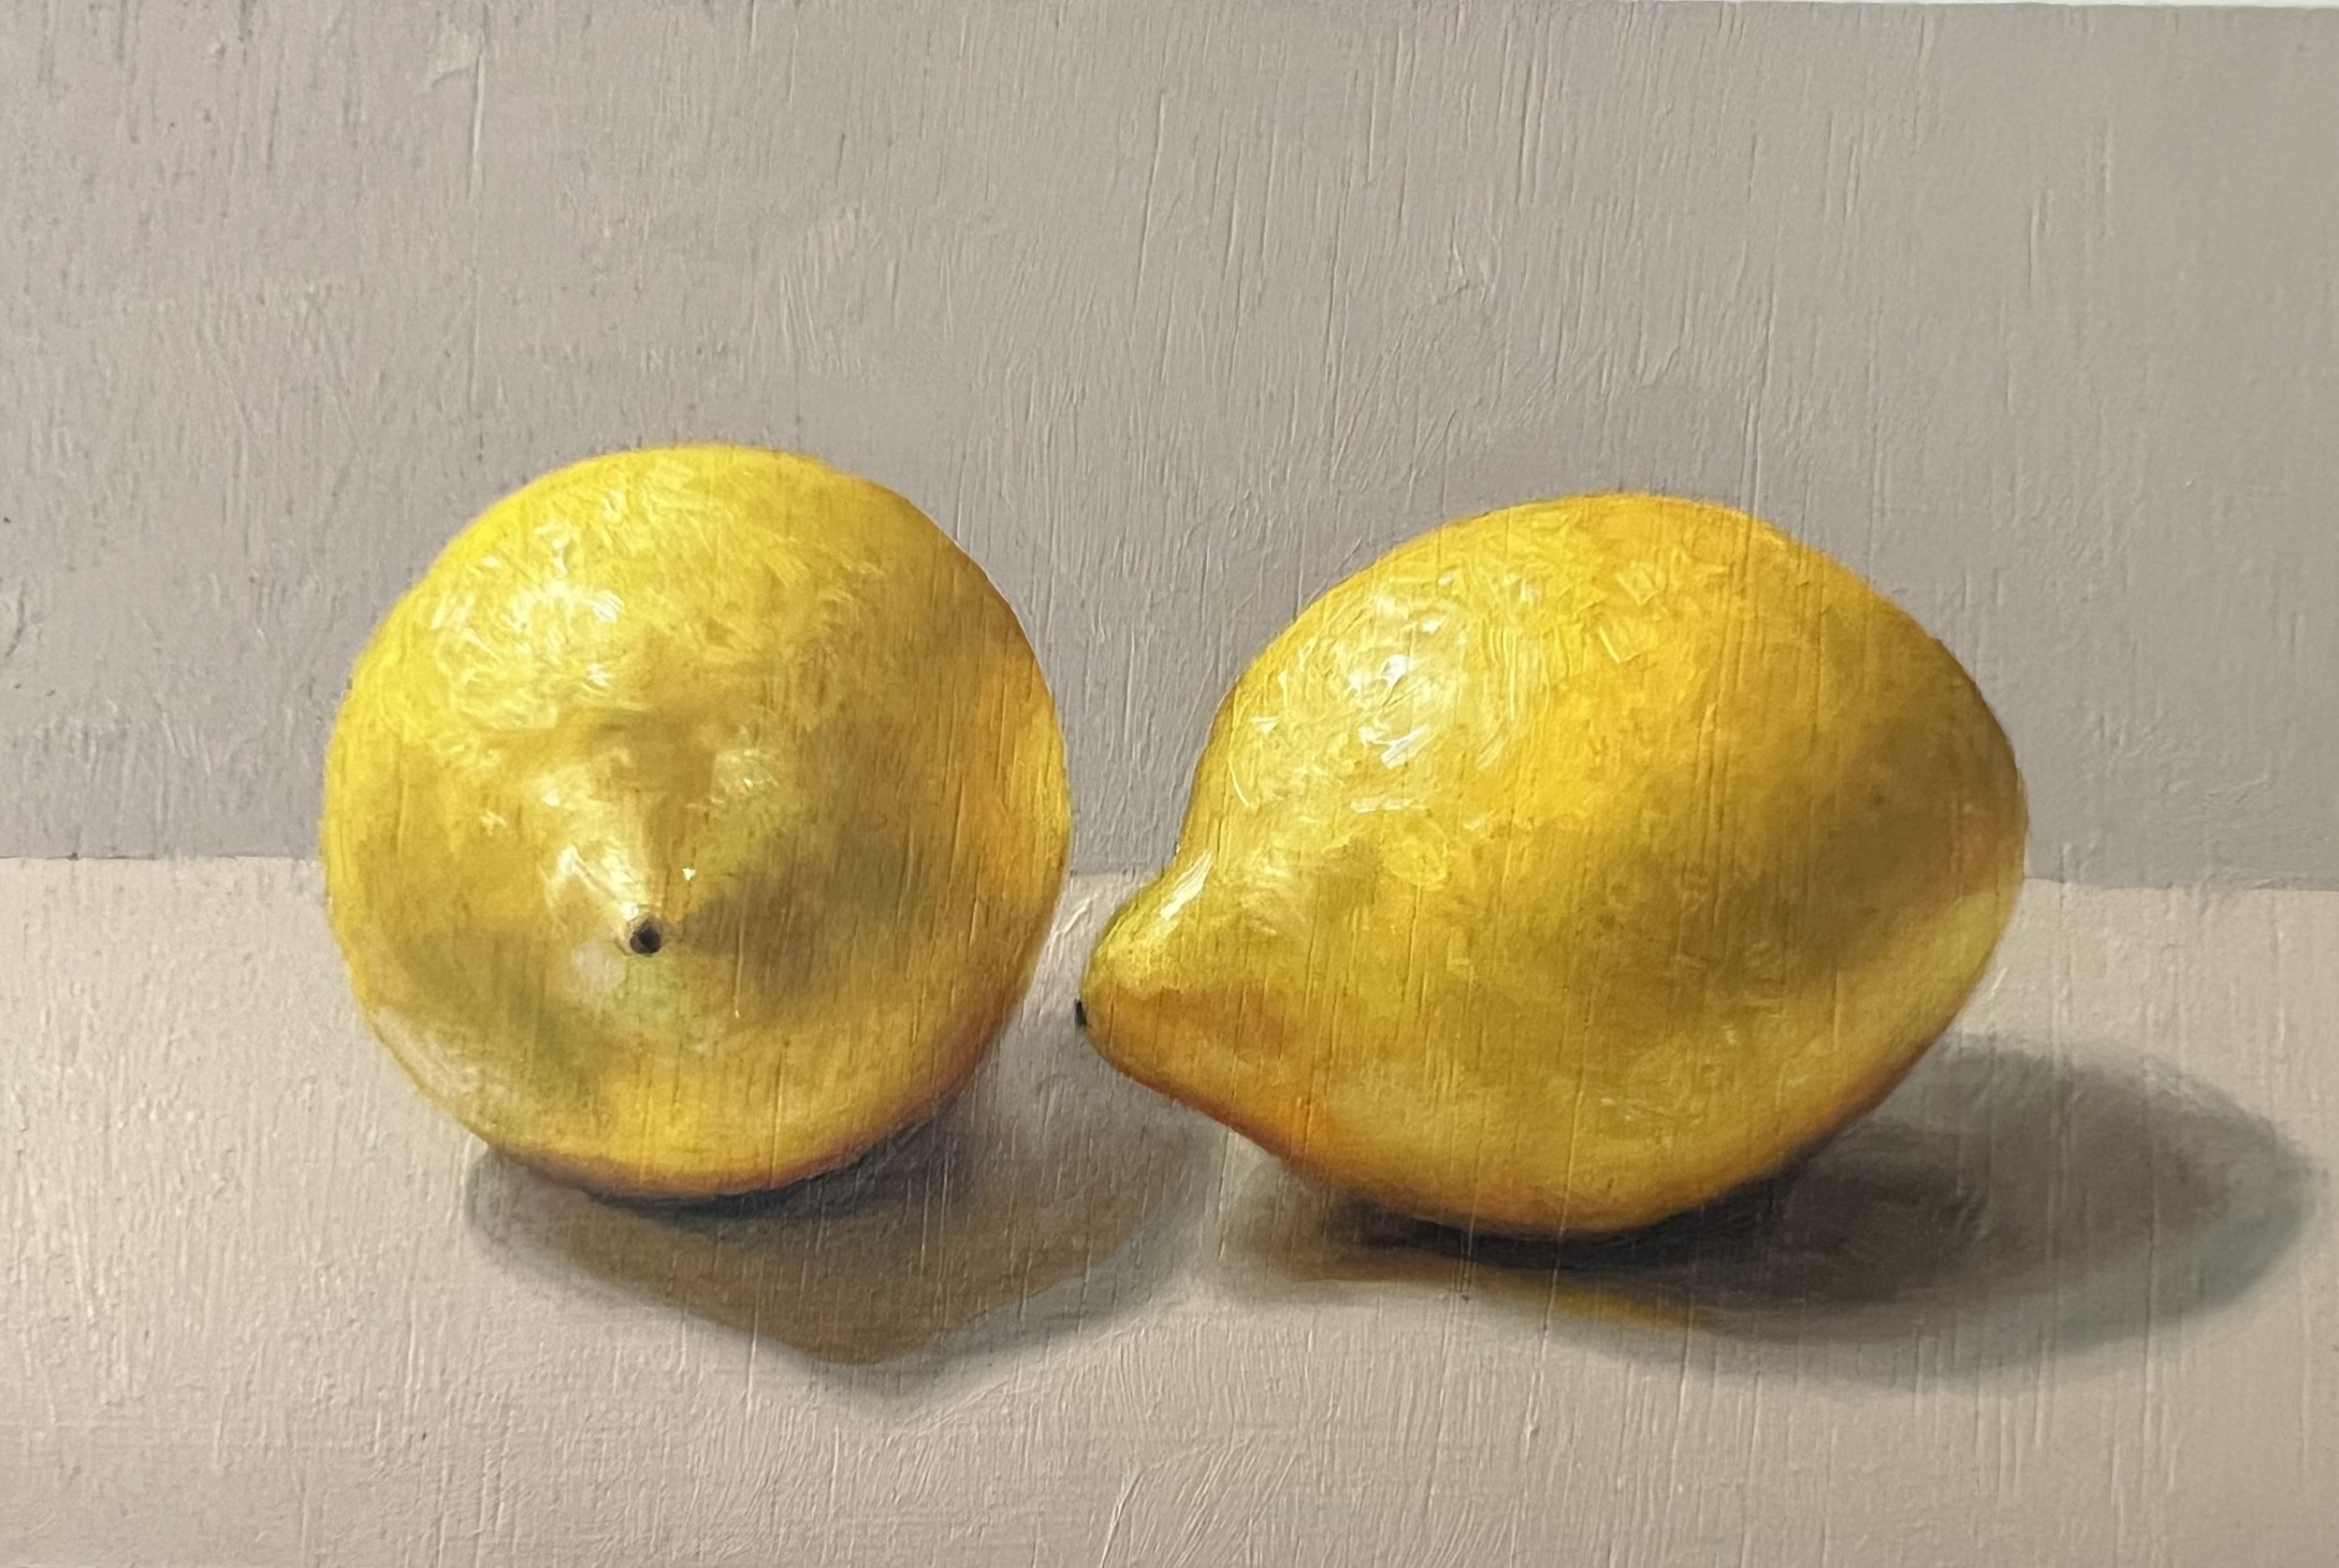 Two lemons study